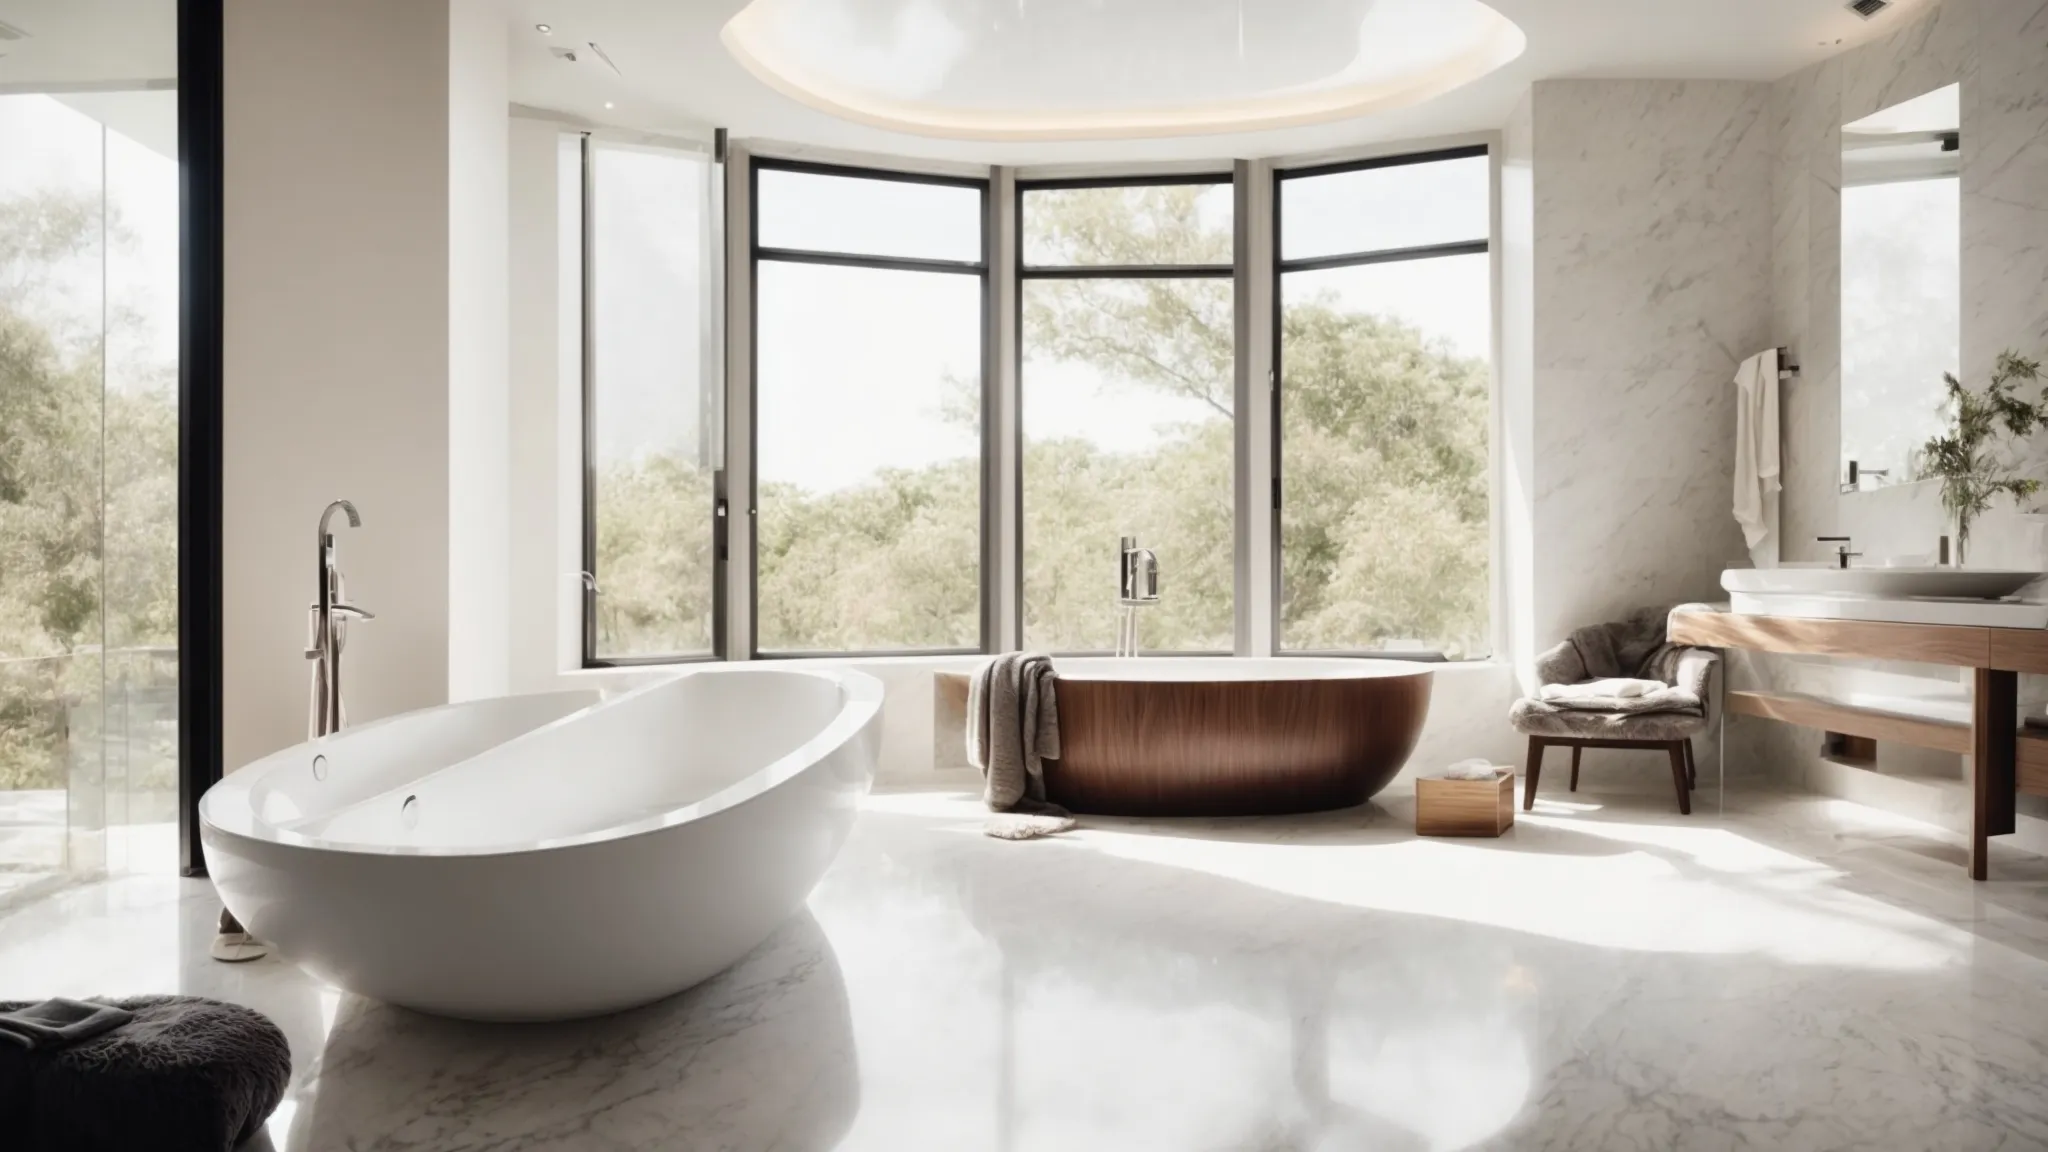 a sleek, free-standing marble bathtub sits elegantly in a spacious, minimalist bathroom, radiating luxury and style.